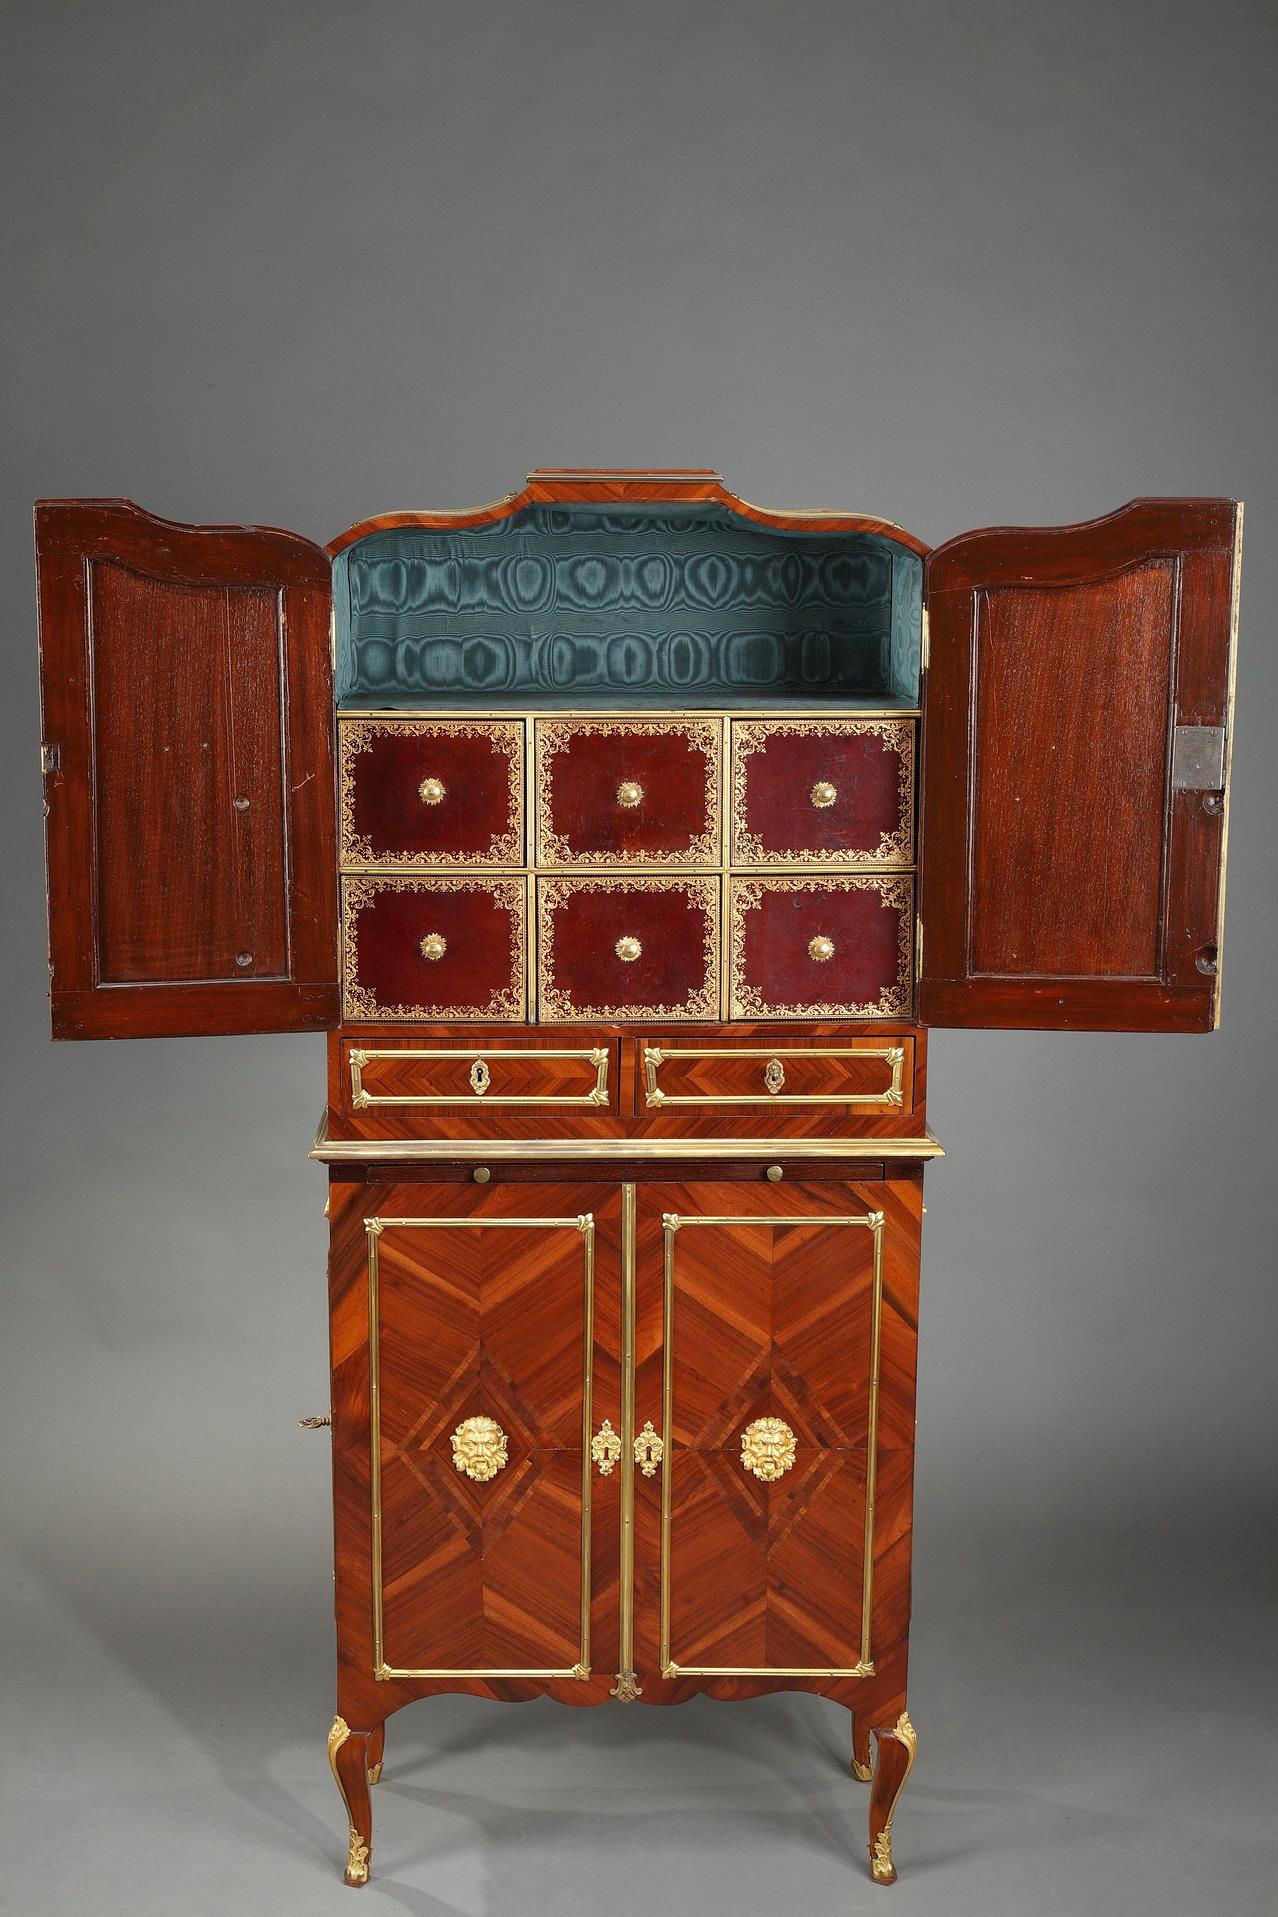 Cartonnier, cabinet wooden veneer, furniture, Louis XVI, Versailles, Antique furniture, desk